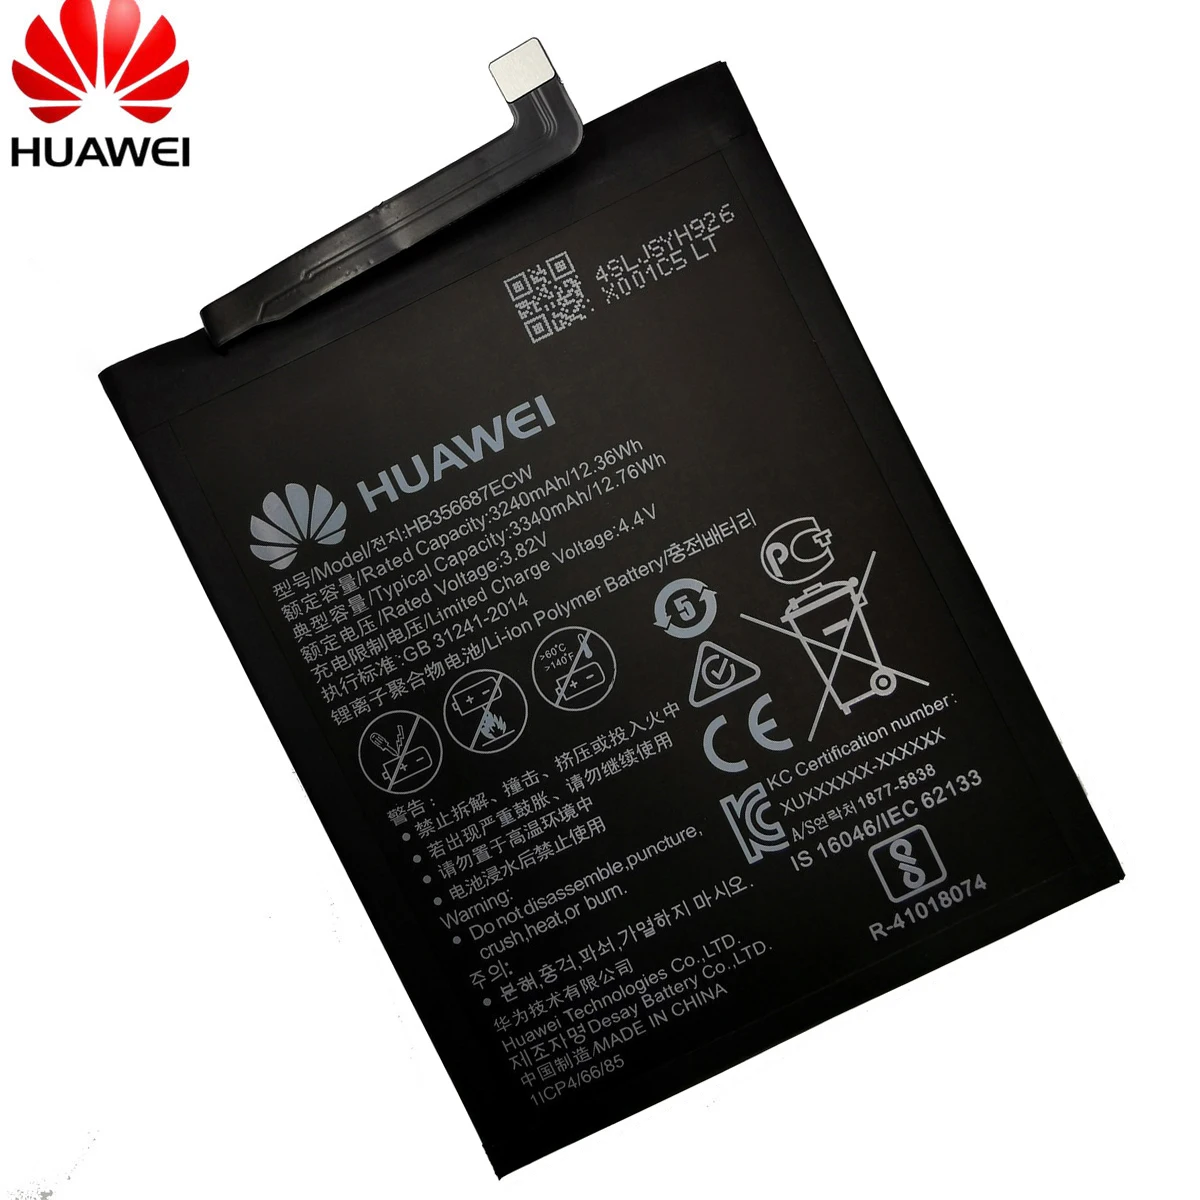  - 100% Original Battery HB356687ECW For Huawei Nova 2Plus 2i 2S 3i 4e Huawei P30 Lite Mate SE G10 Mate 10 Lite Honor 7X / 9i